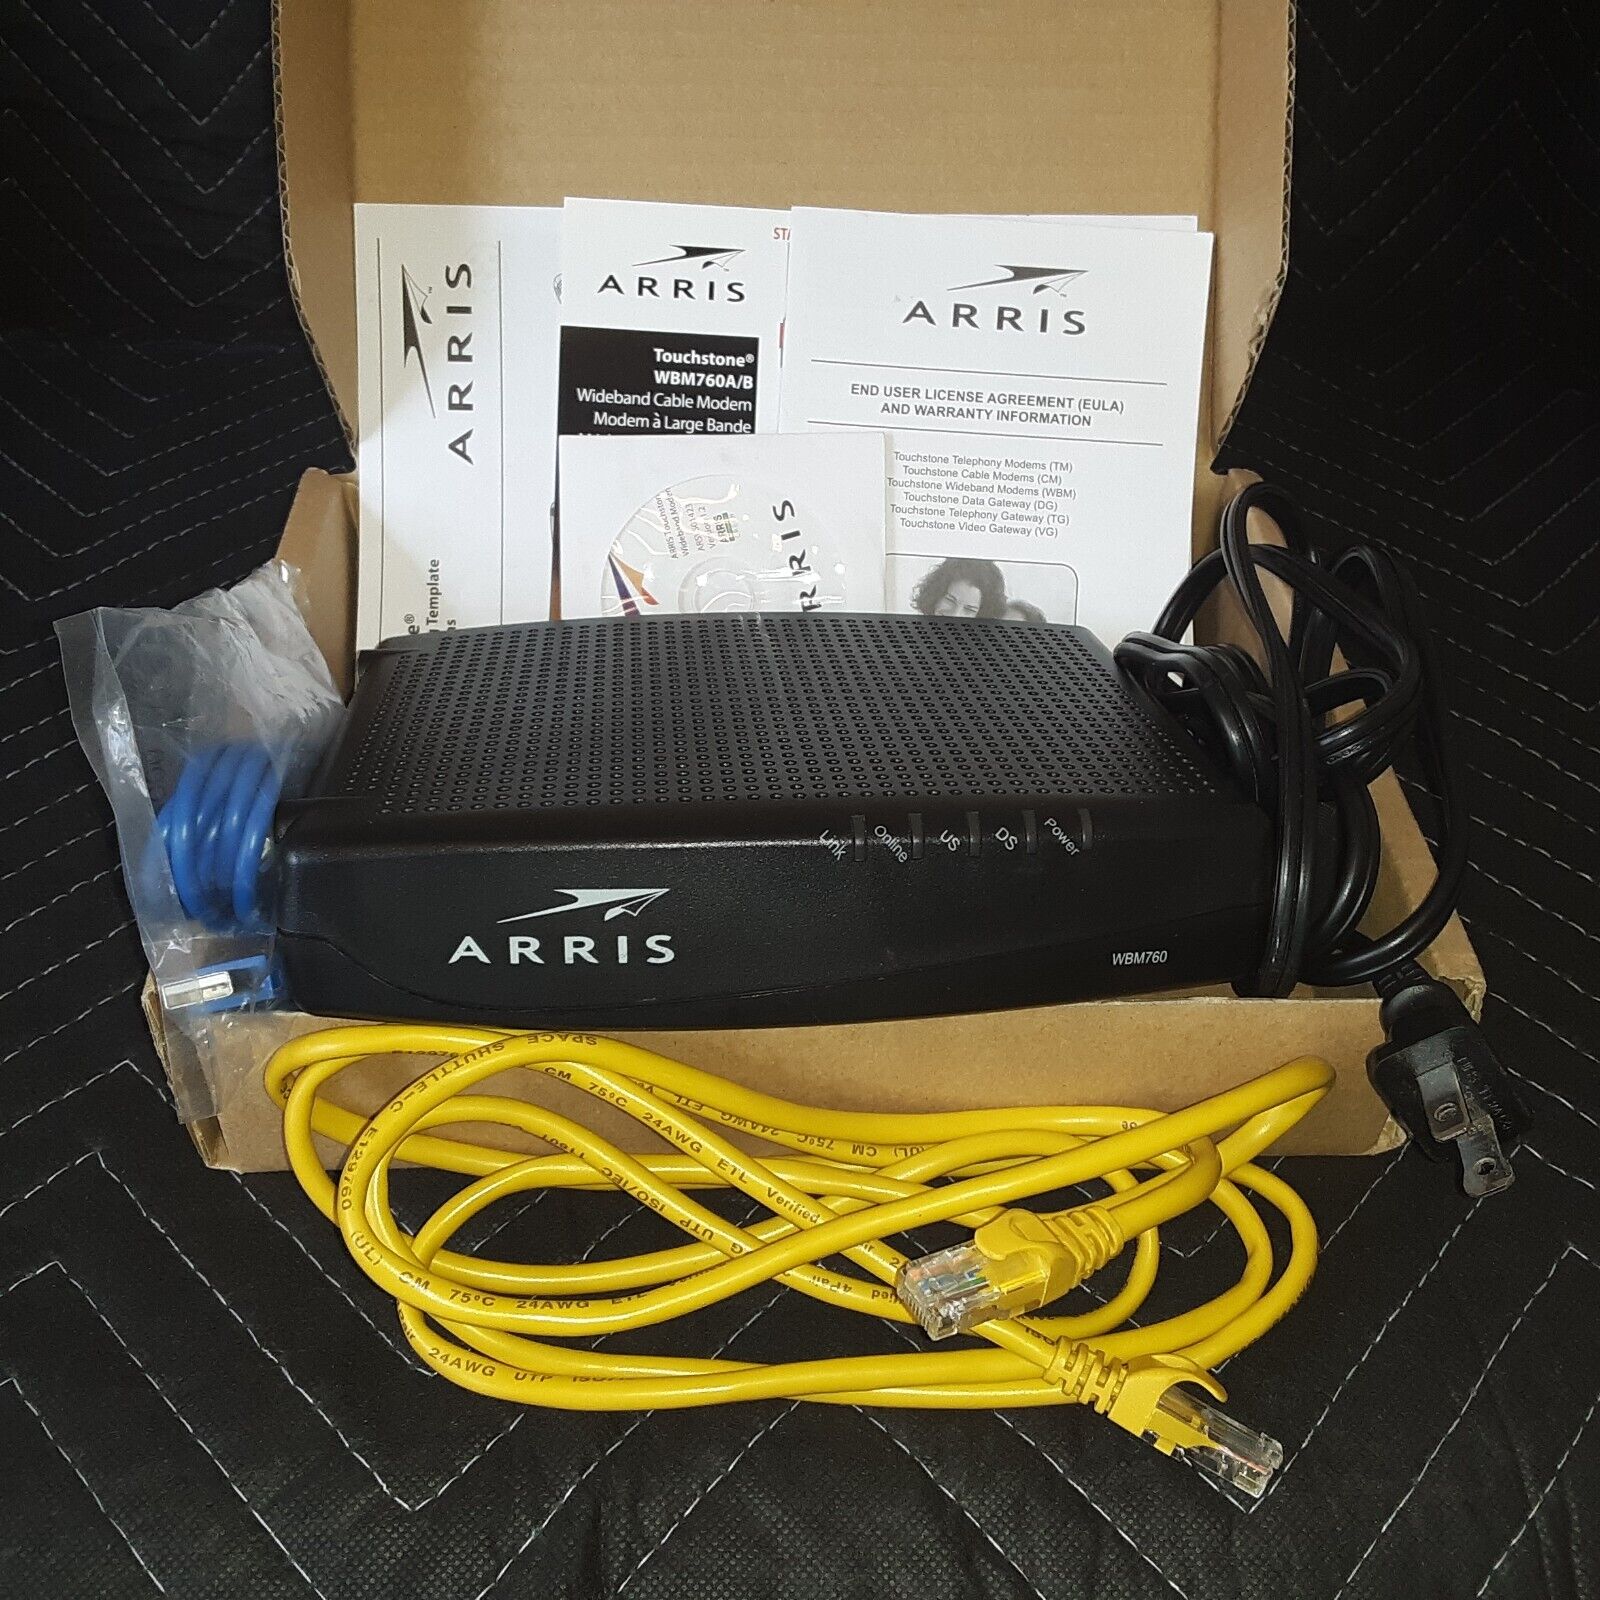 ARRIS Touchstone Telephony Cable Modem WBM760A Complete w/ original accessories